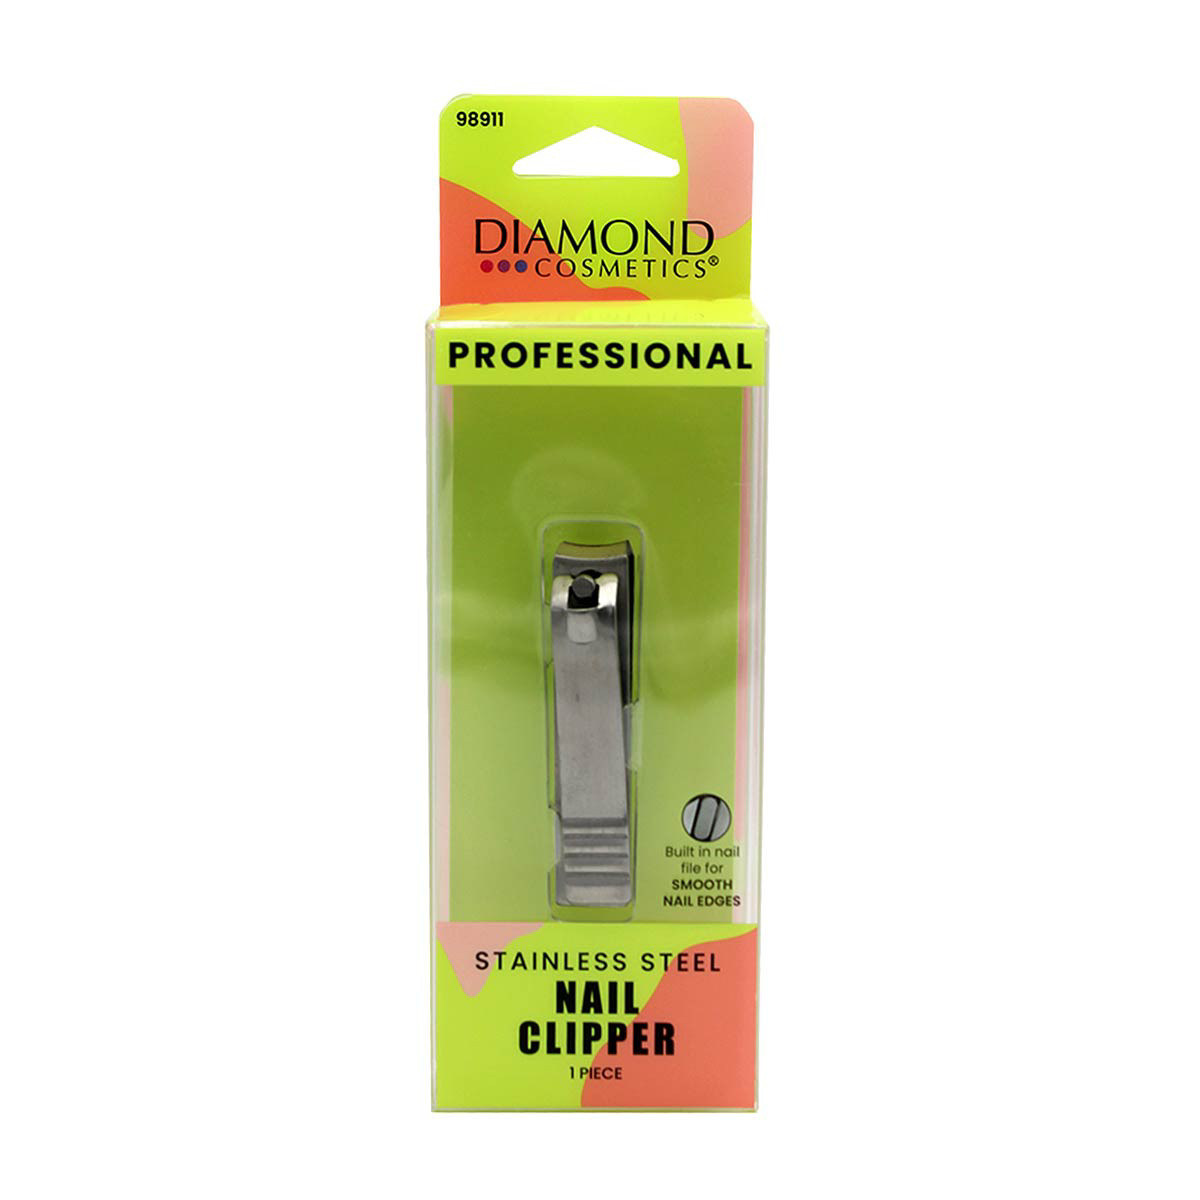 Diamond Cosmetics Professional Nail Clipper